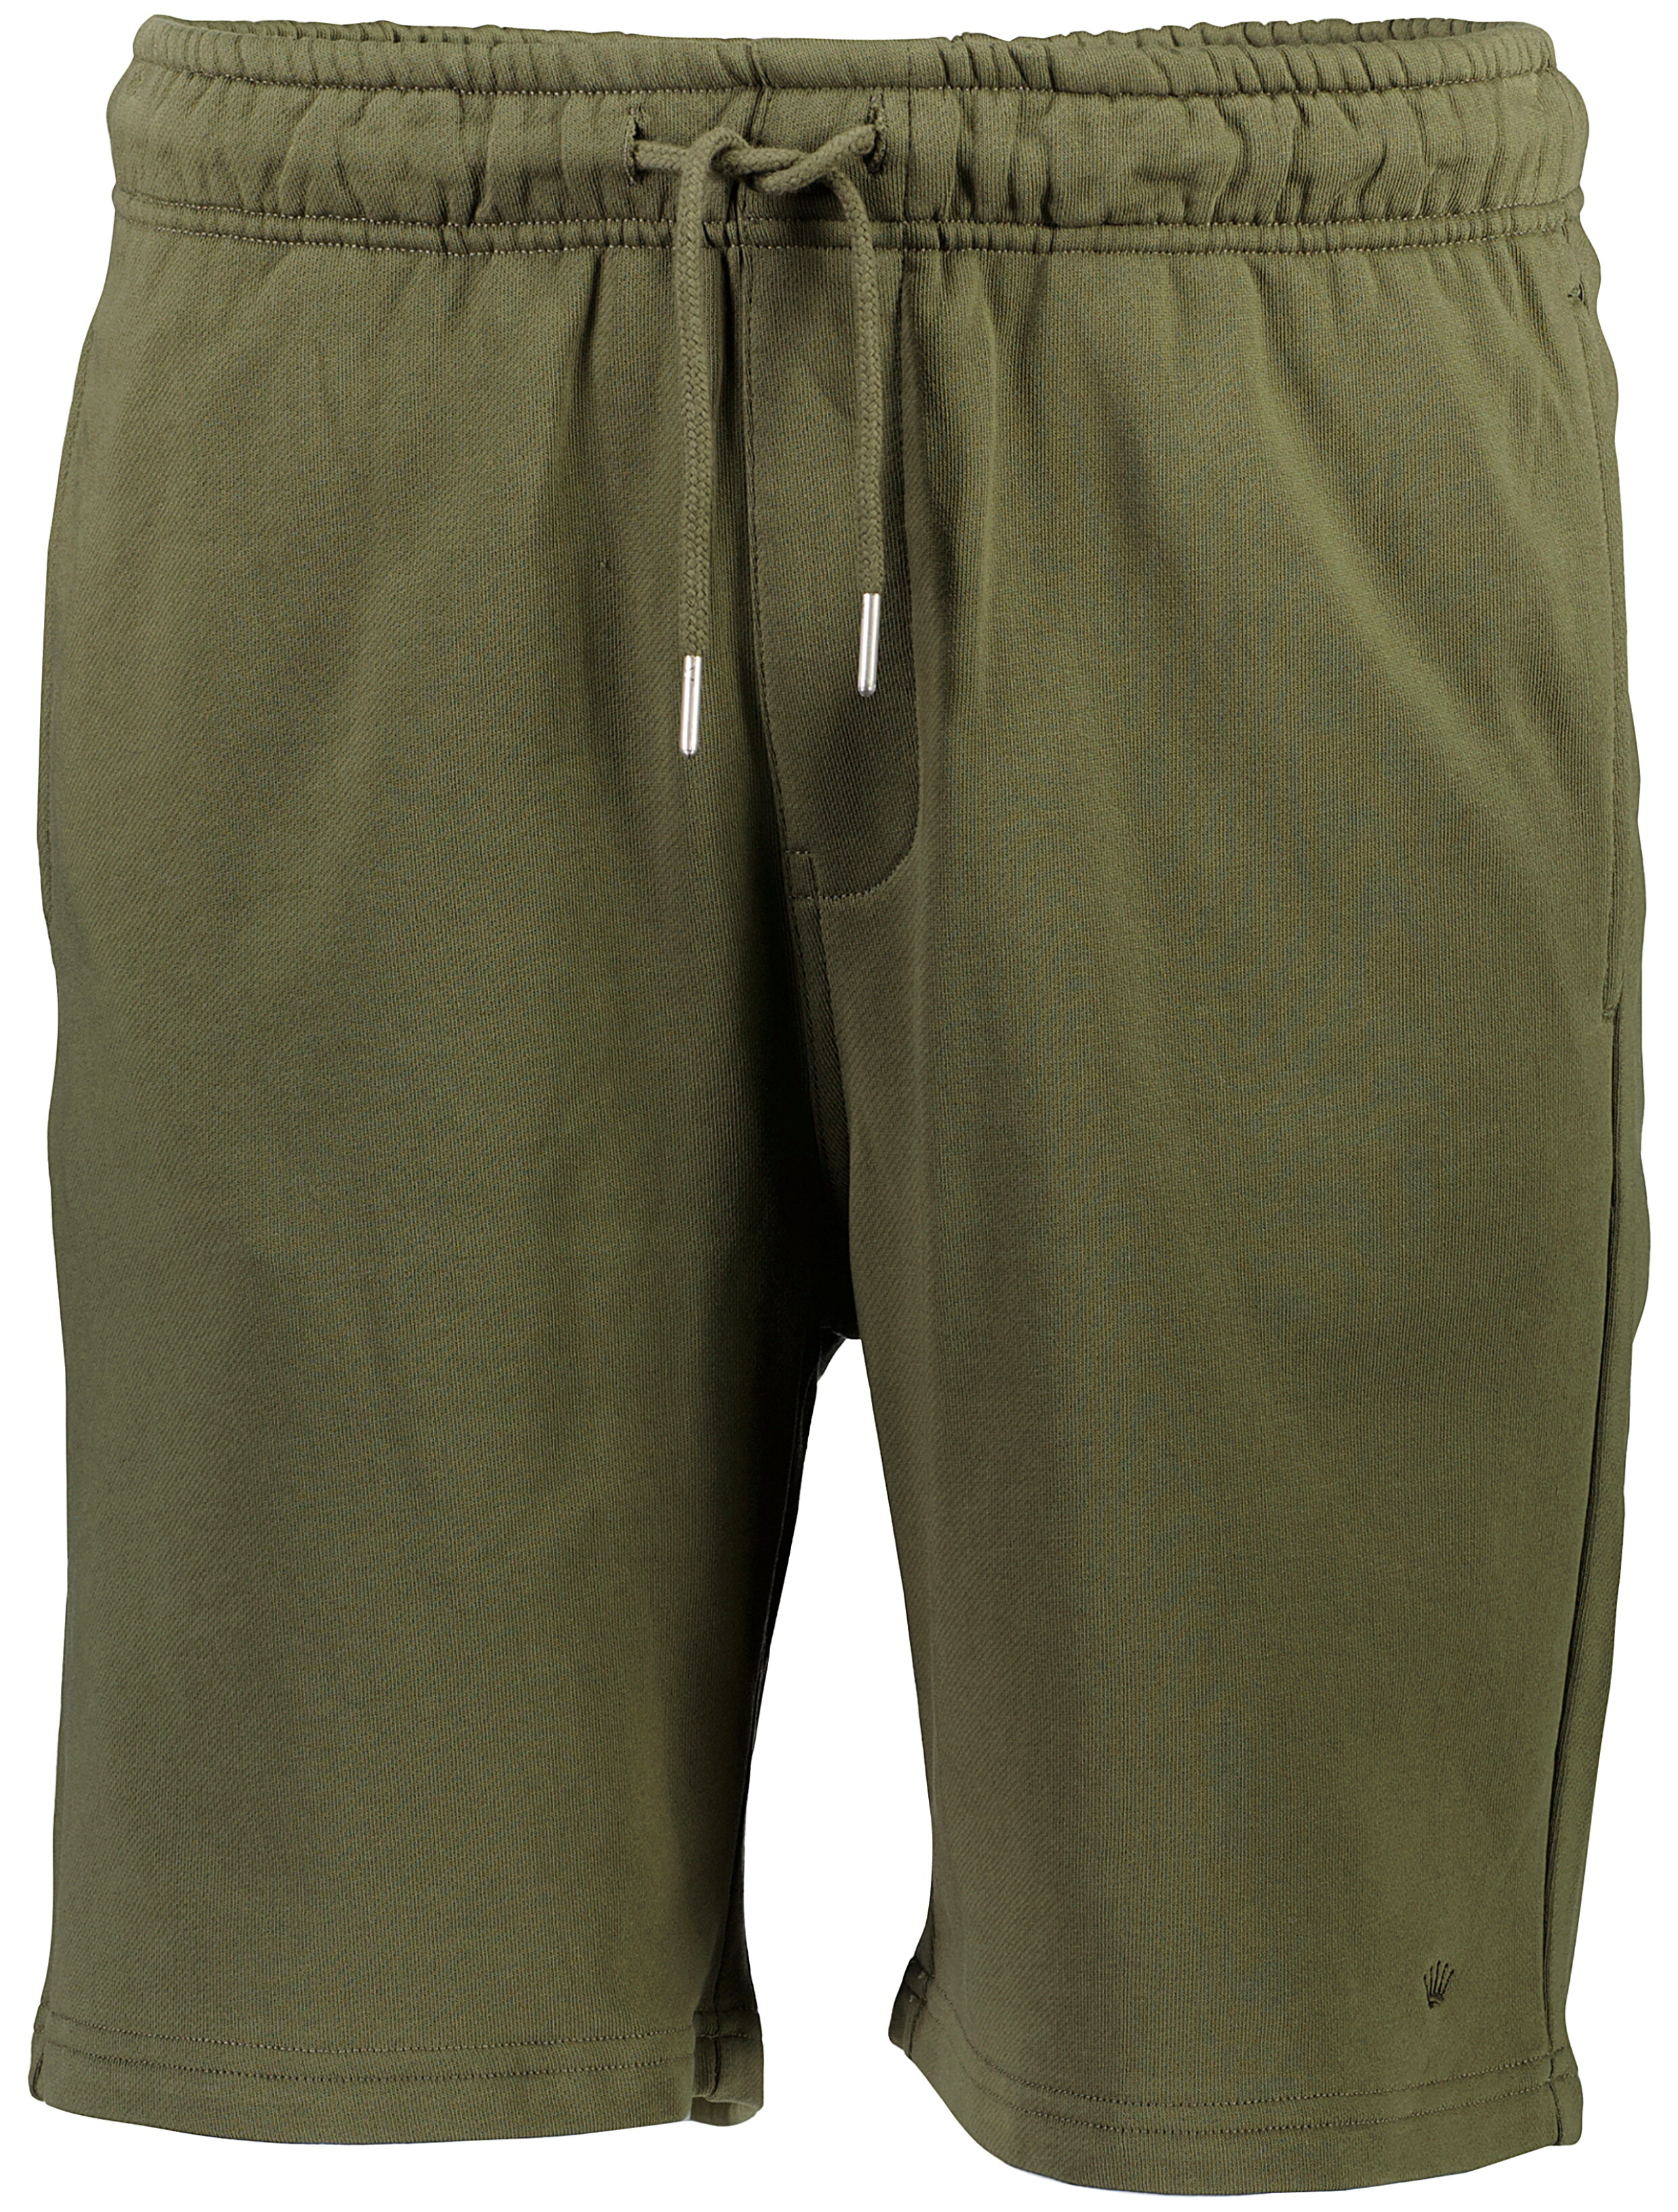 Junk de Luxe Casual shorts grön / army